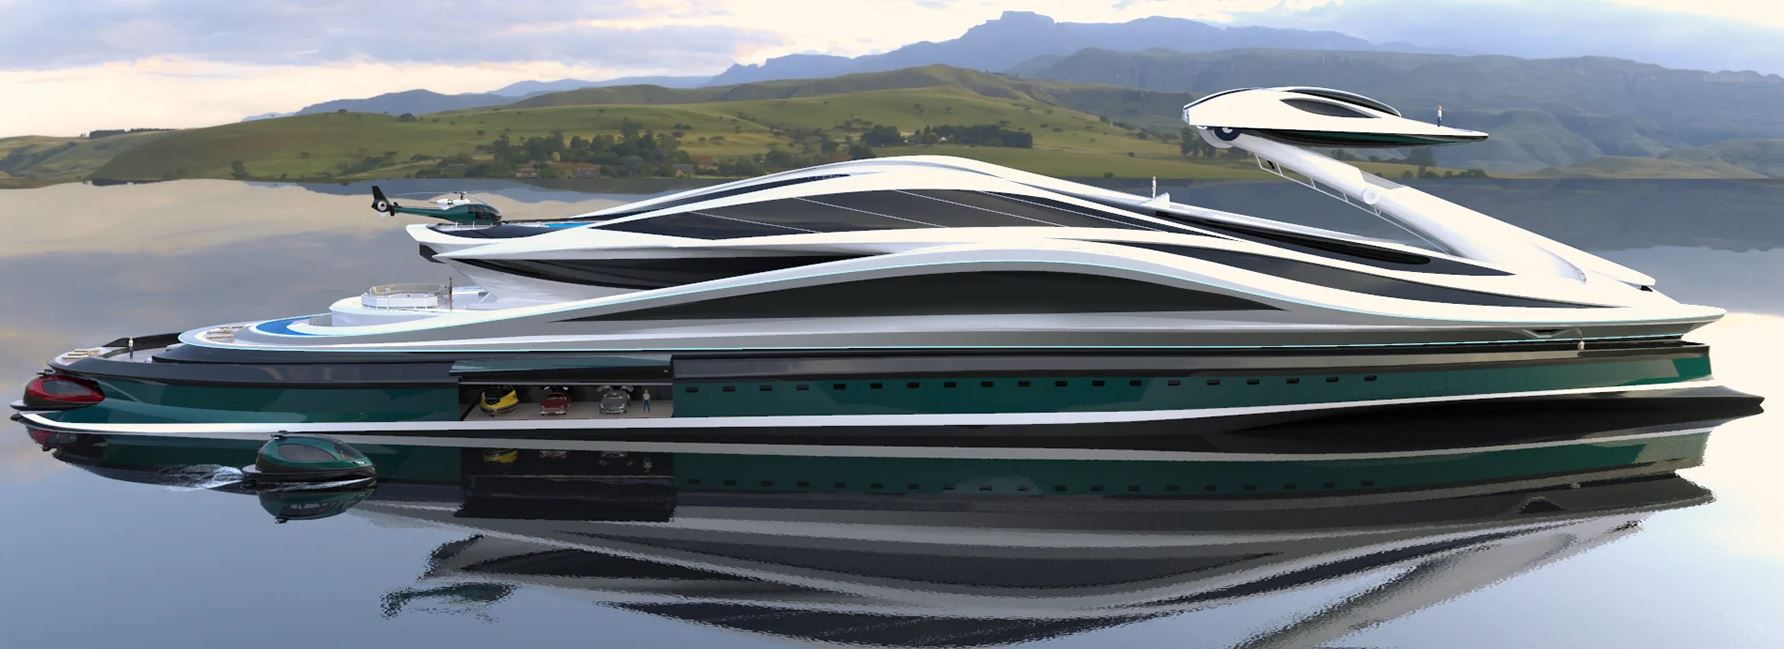 Lazzarini's Avanguardia, the Crazy Swan-Shaped Megayacht With Its